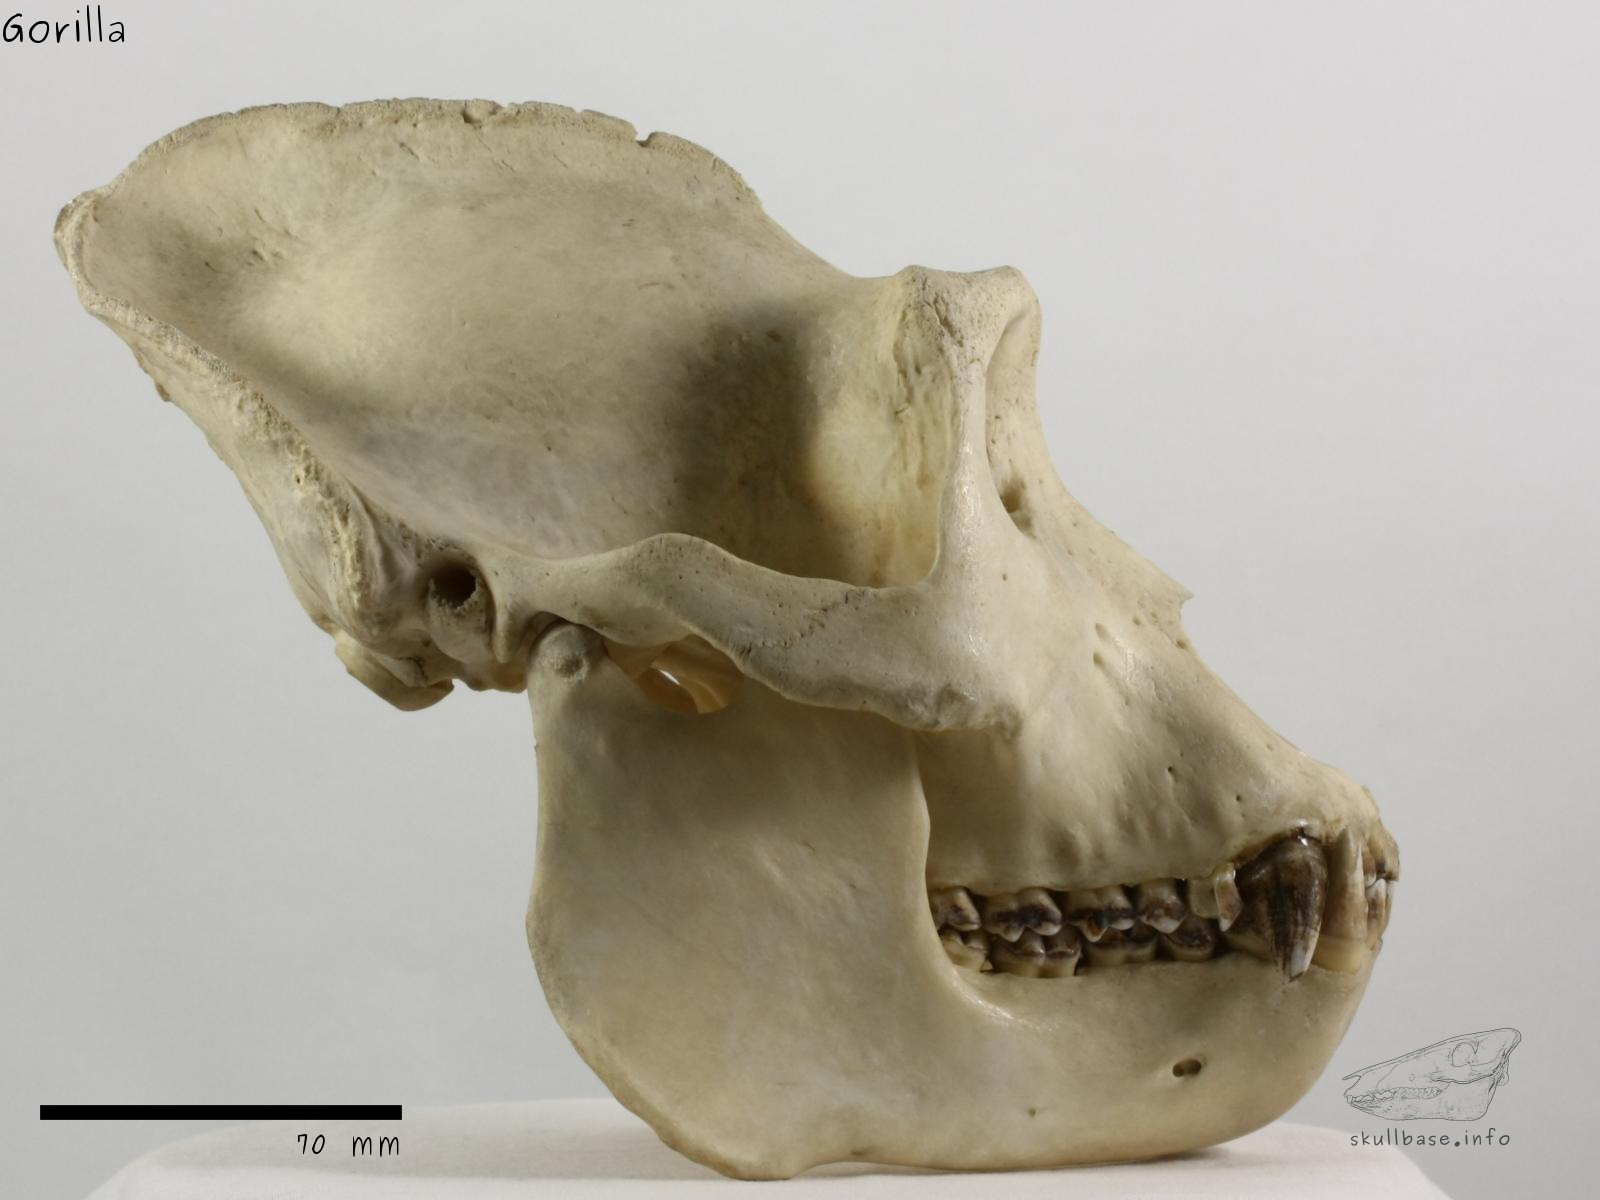 Gorilla (Gorilla gorilla) skull lateral view